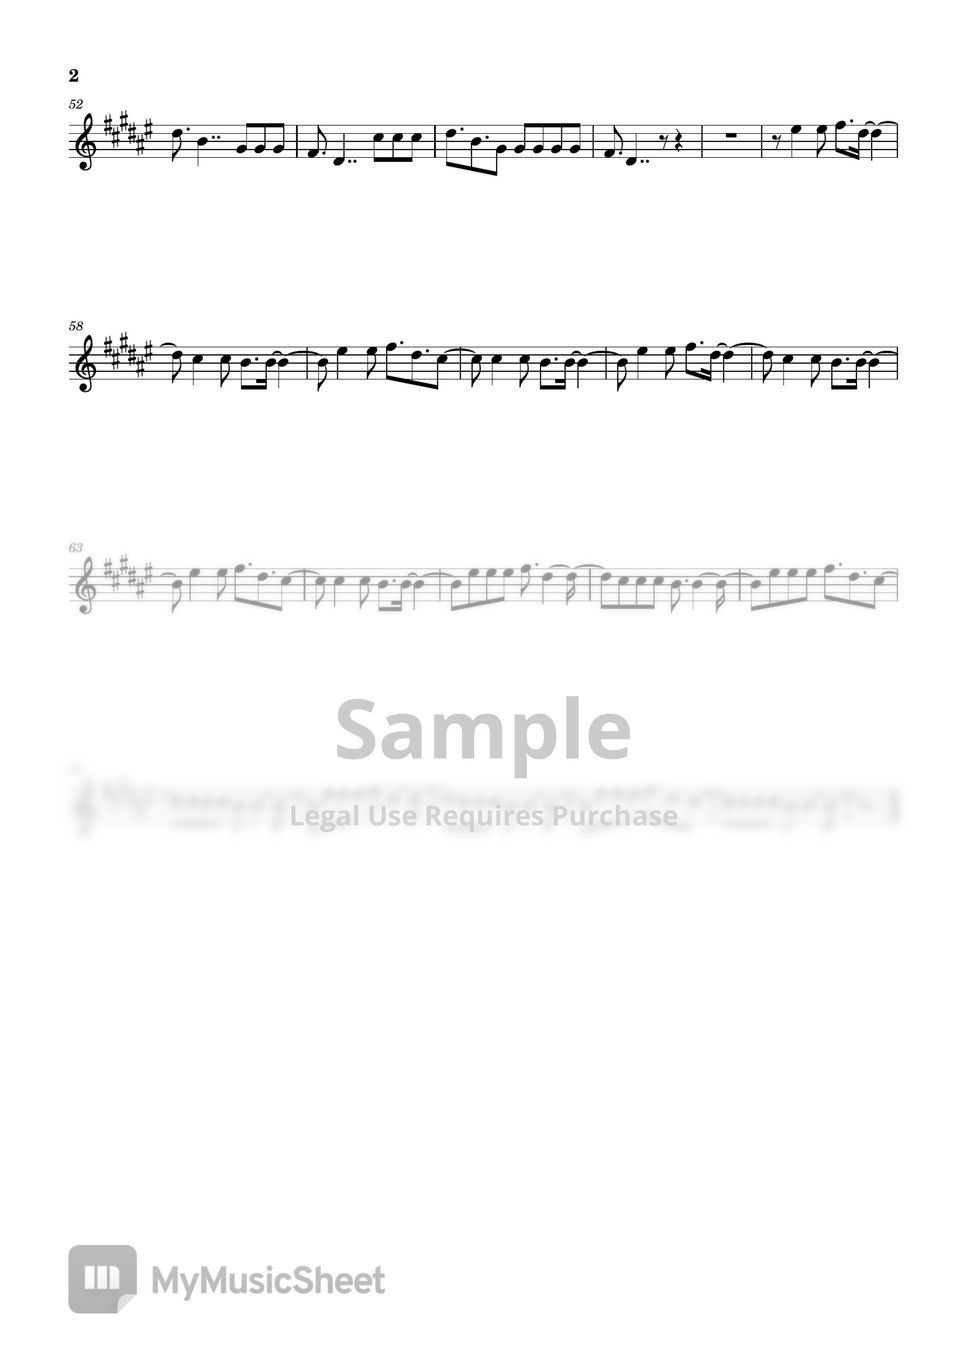 ✓ EL MAMBO – Kiko Rivera, Partitura para CHARANGA 🎺 Sheet music for  Piano, Trombone, Tuba, Saxophone alto & more instruments (Marching Band)